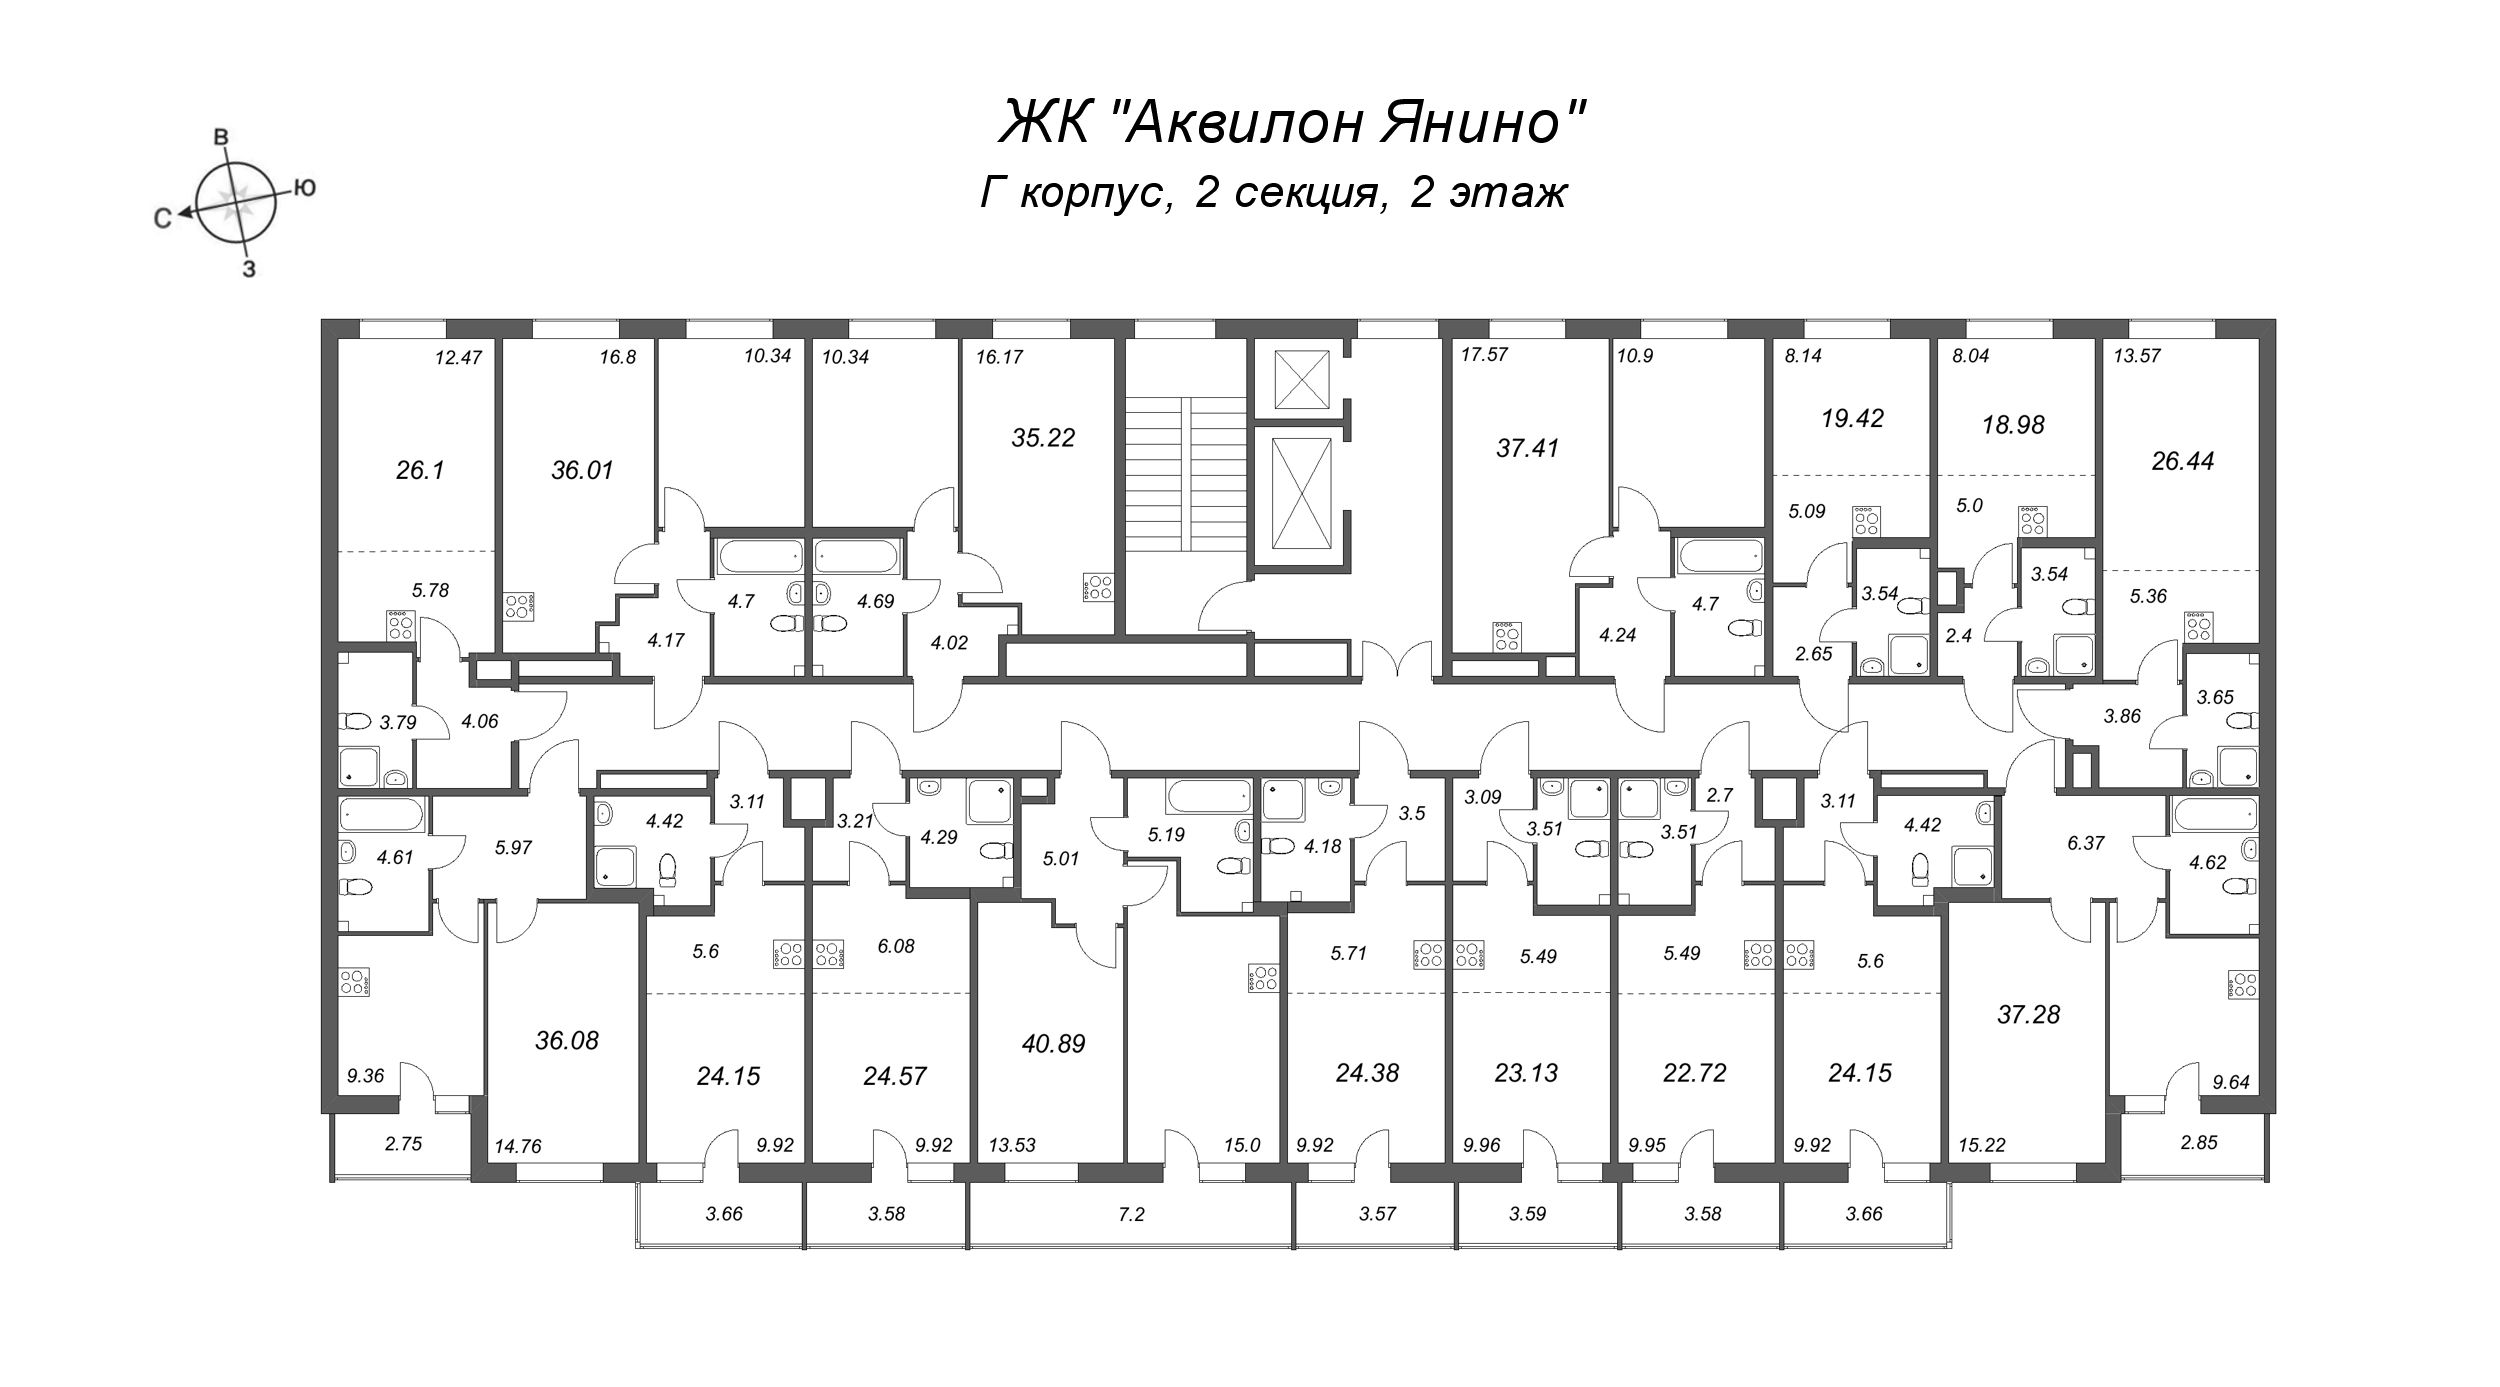 2-комнатная (Евро) квартира, 37.41 м² - планировка этажа